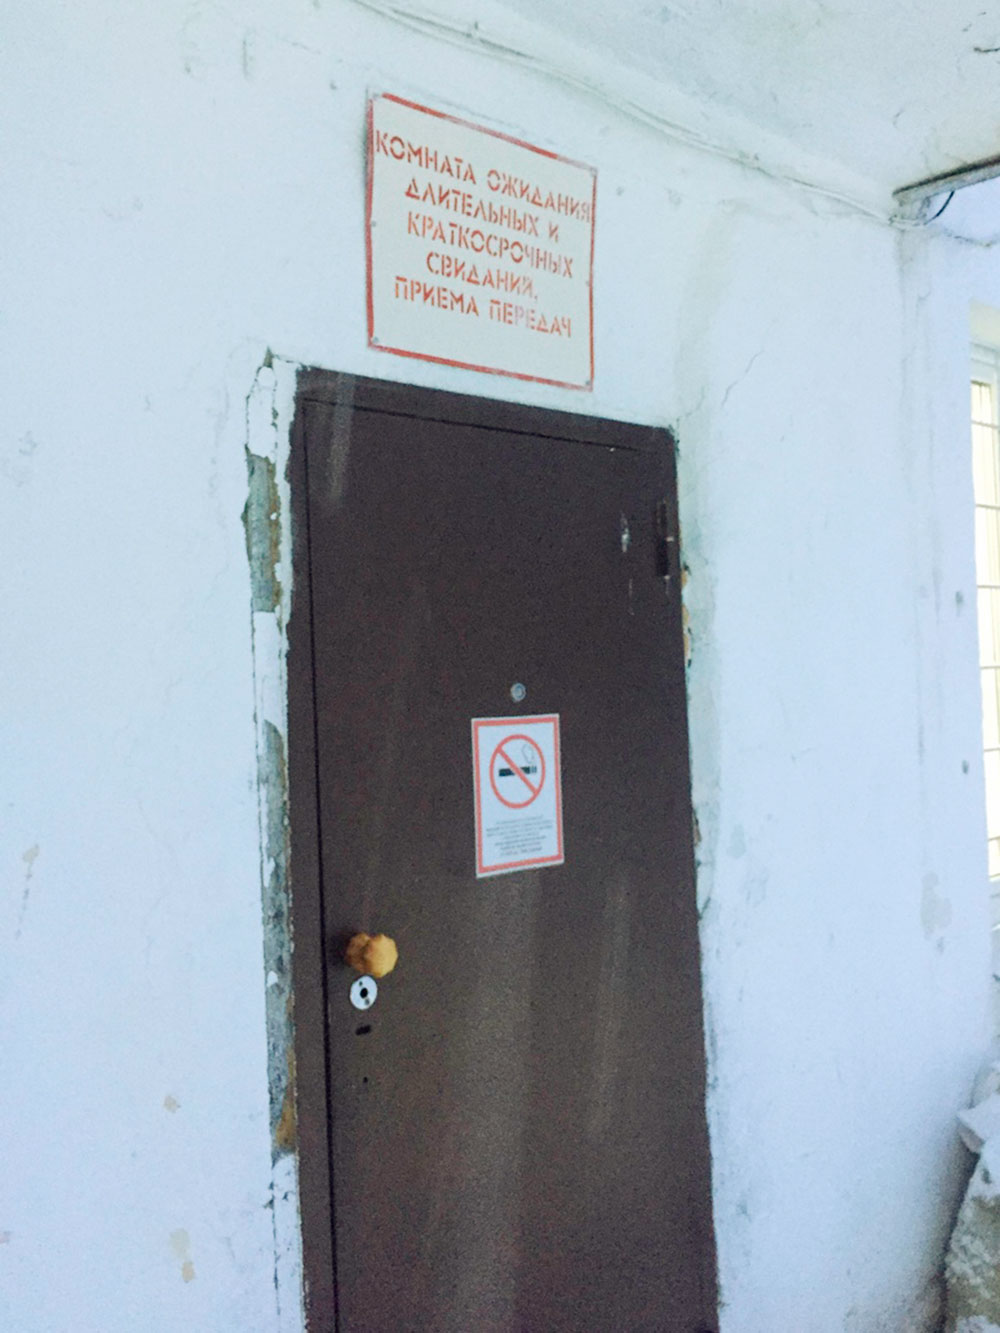 Комната ожидания свиданий и приема передач в ИК⁠-⁠12 поселка Шексна Вологодской области